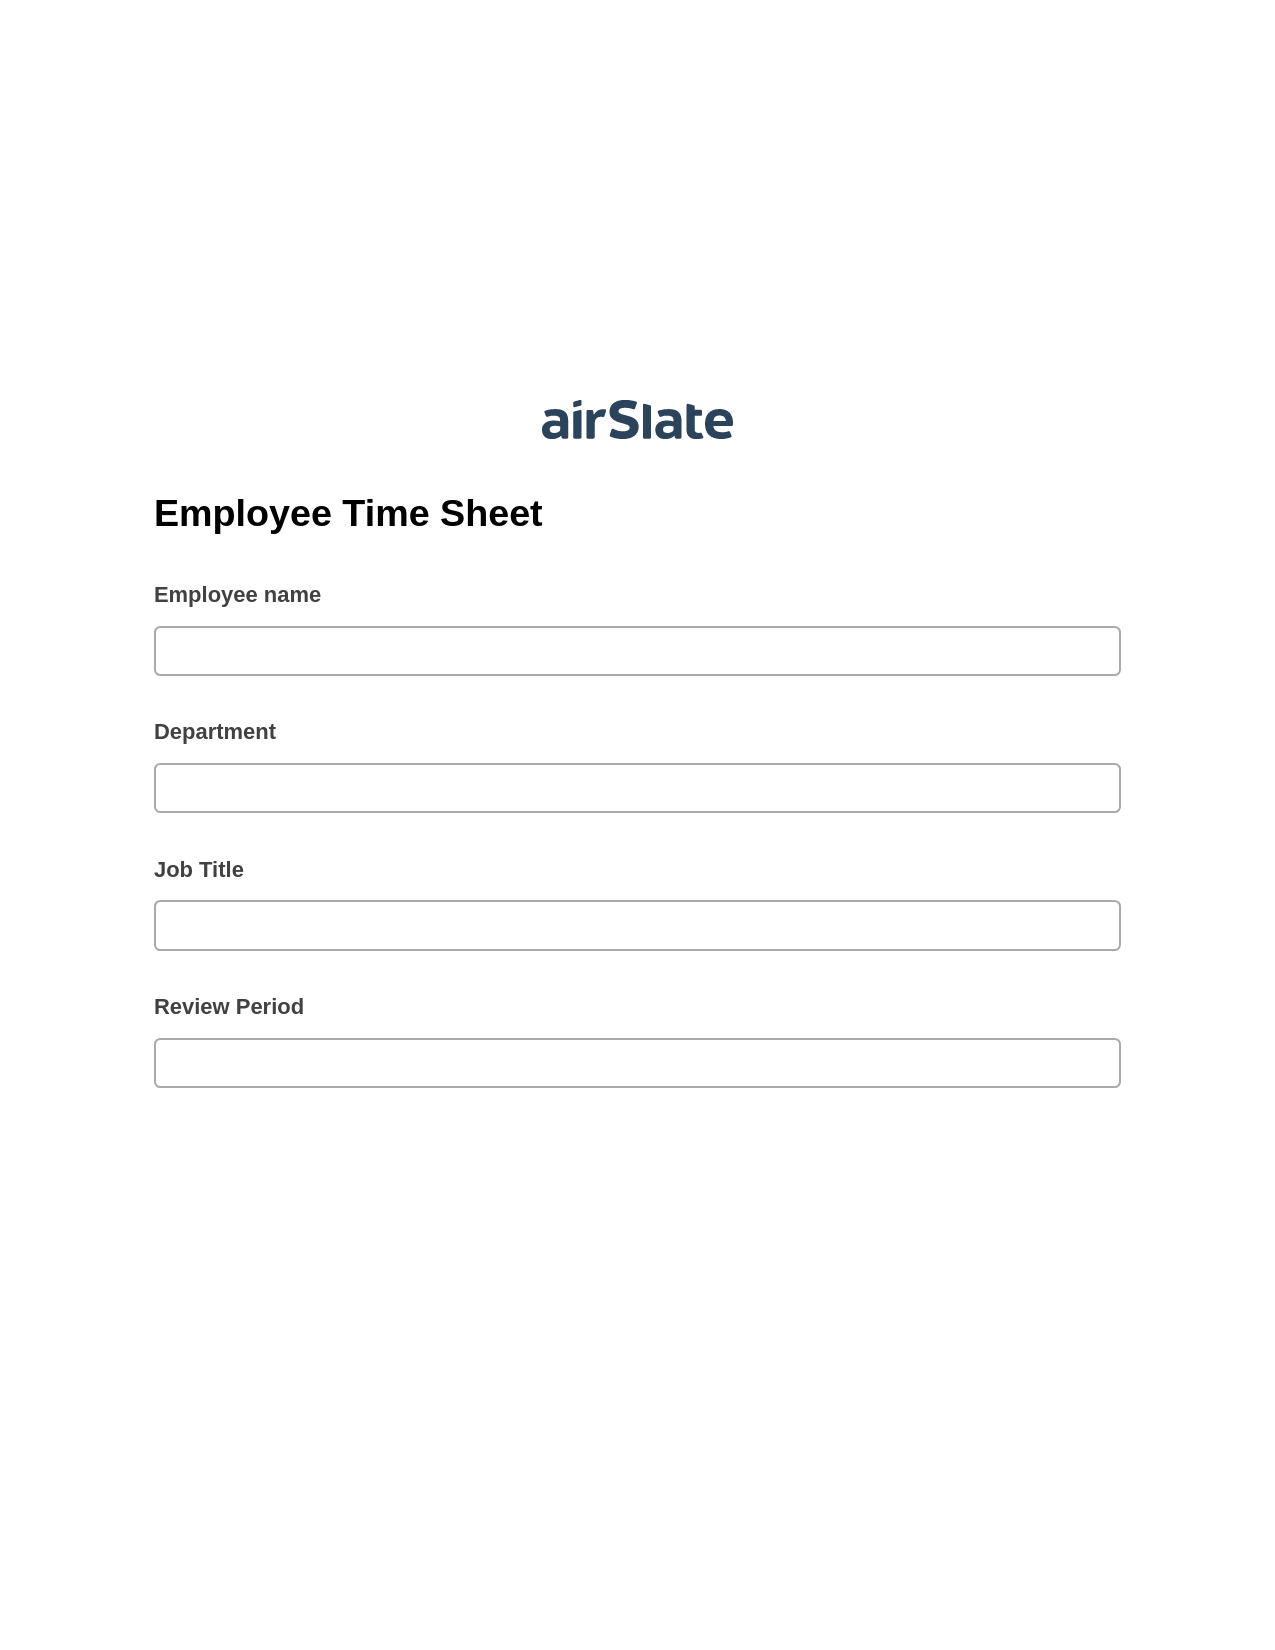 Multirole Employee Time Sheet Pre-fill from Salesforce Records Bot, Google Sheet Two-Way Binding Bot, Export to NetSuite Bot